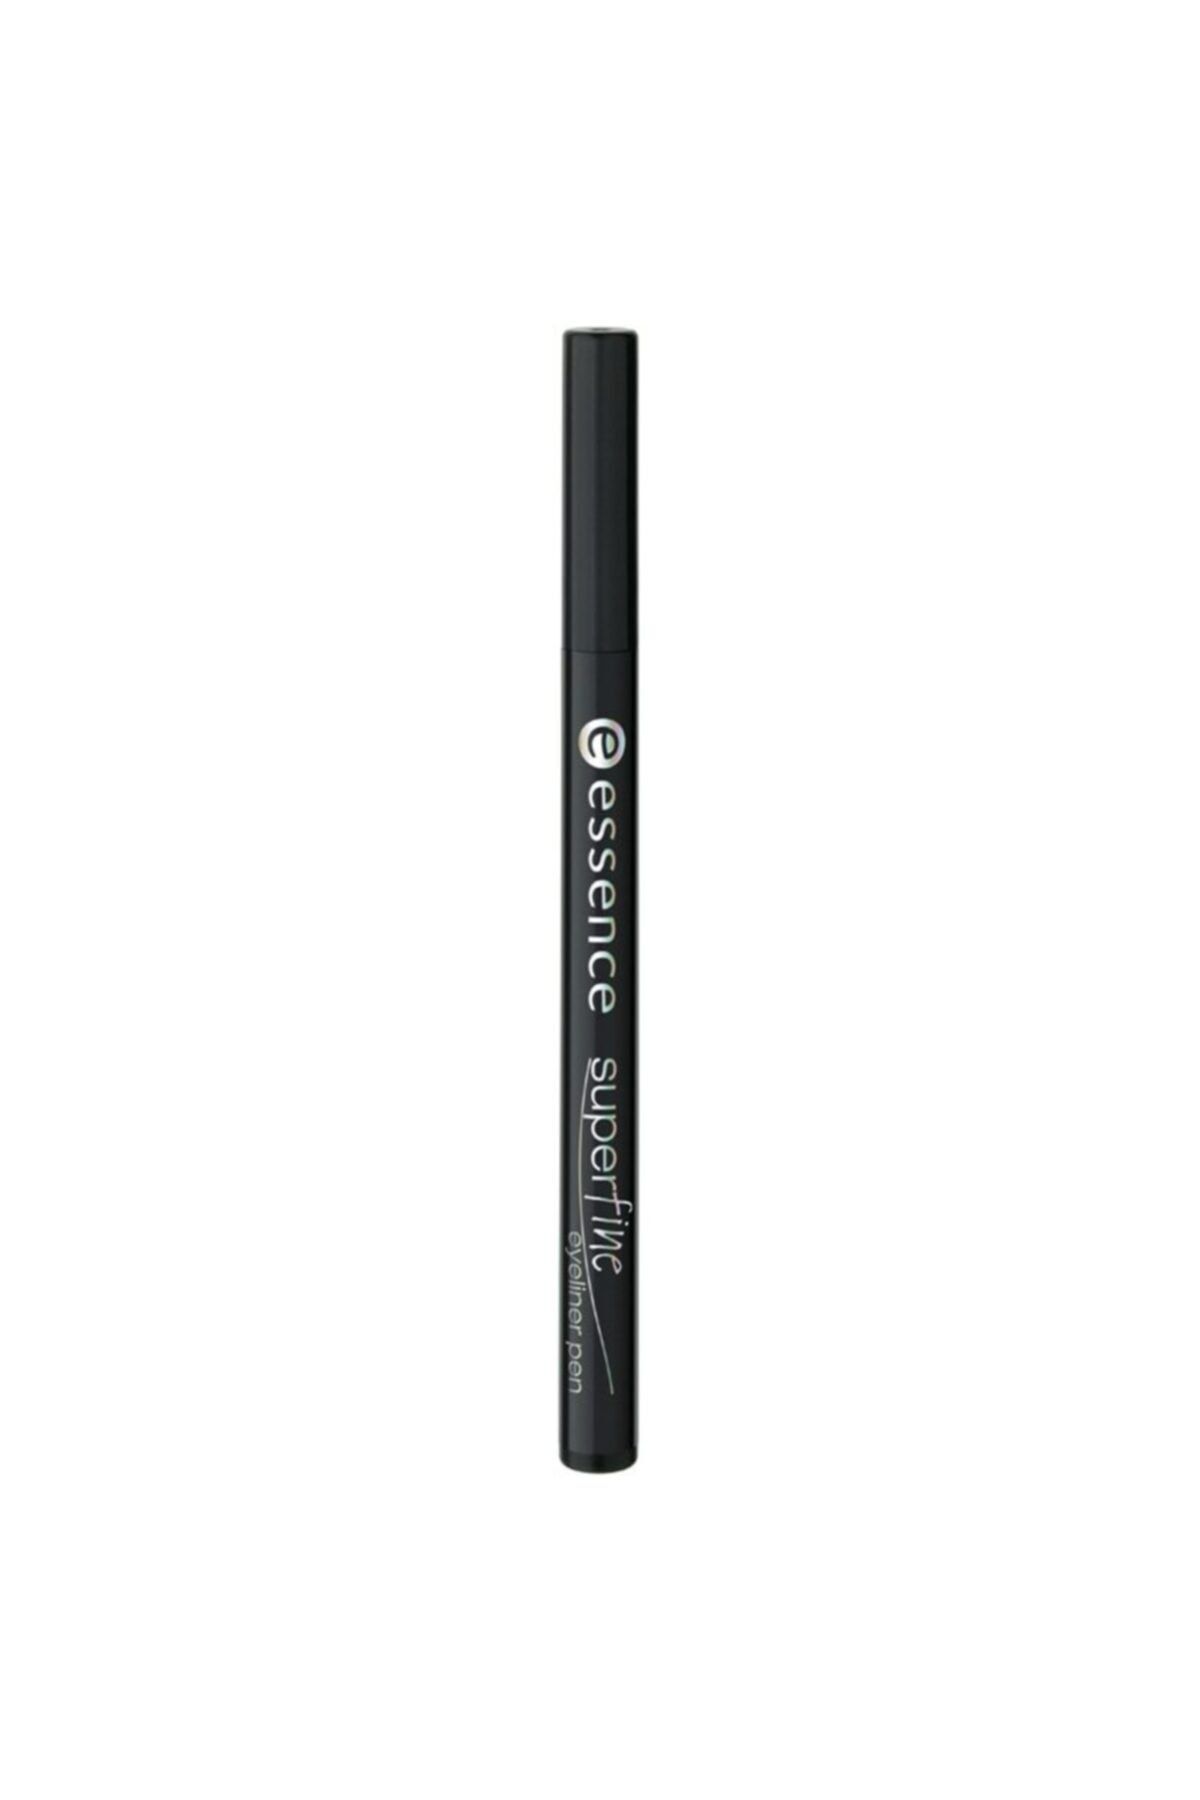 Essence Superfine Eyeliner Pen 01